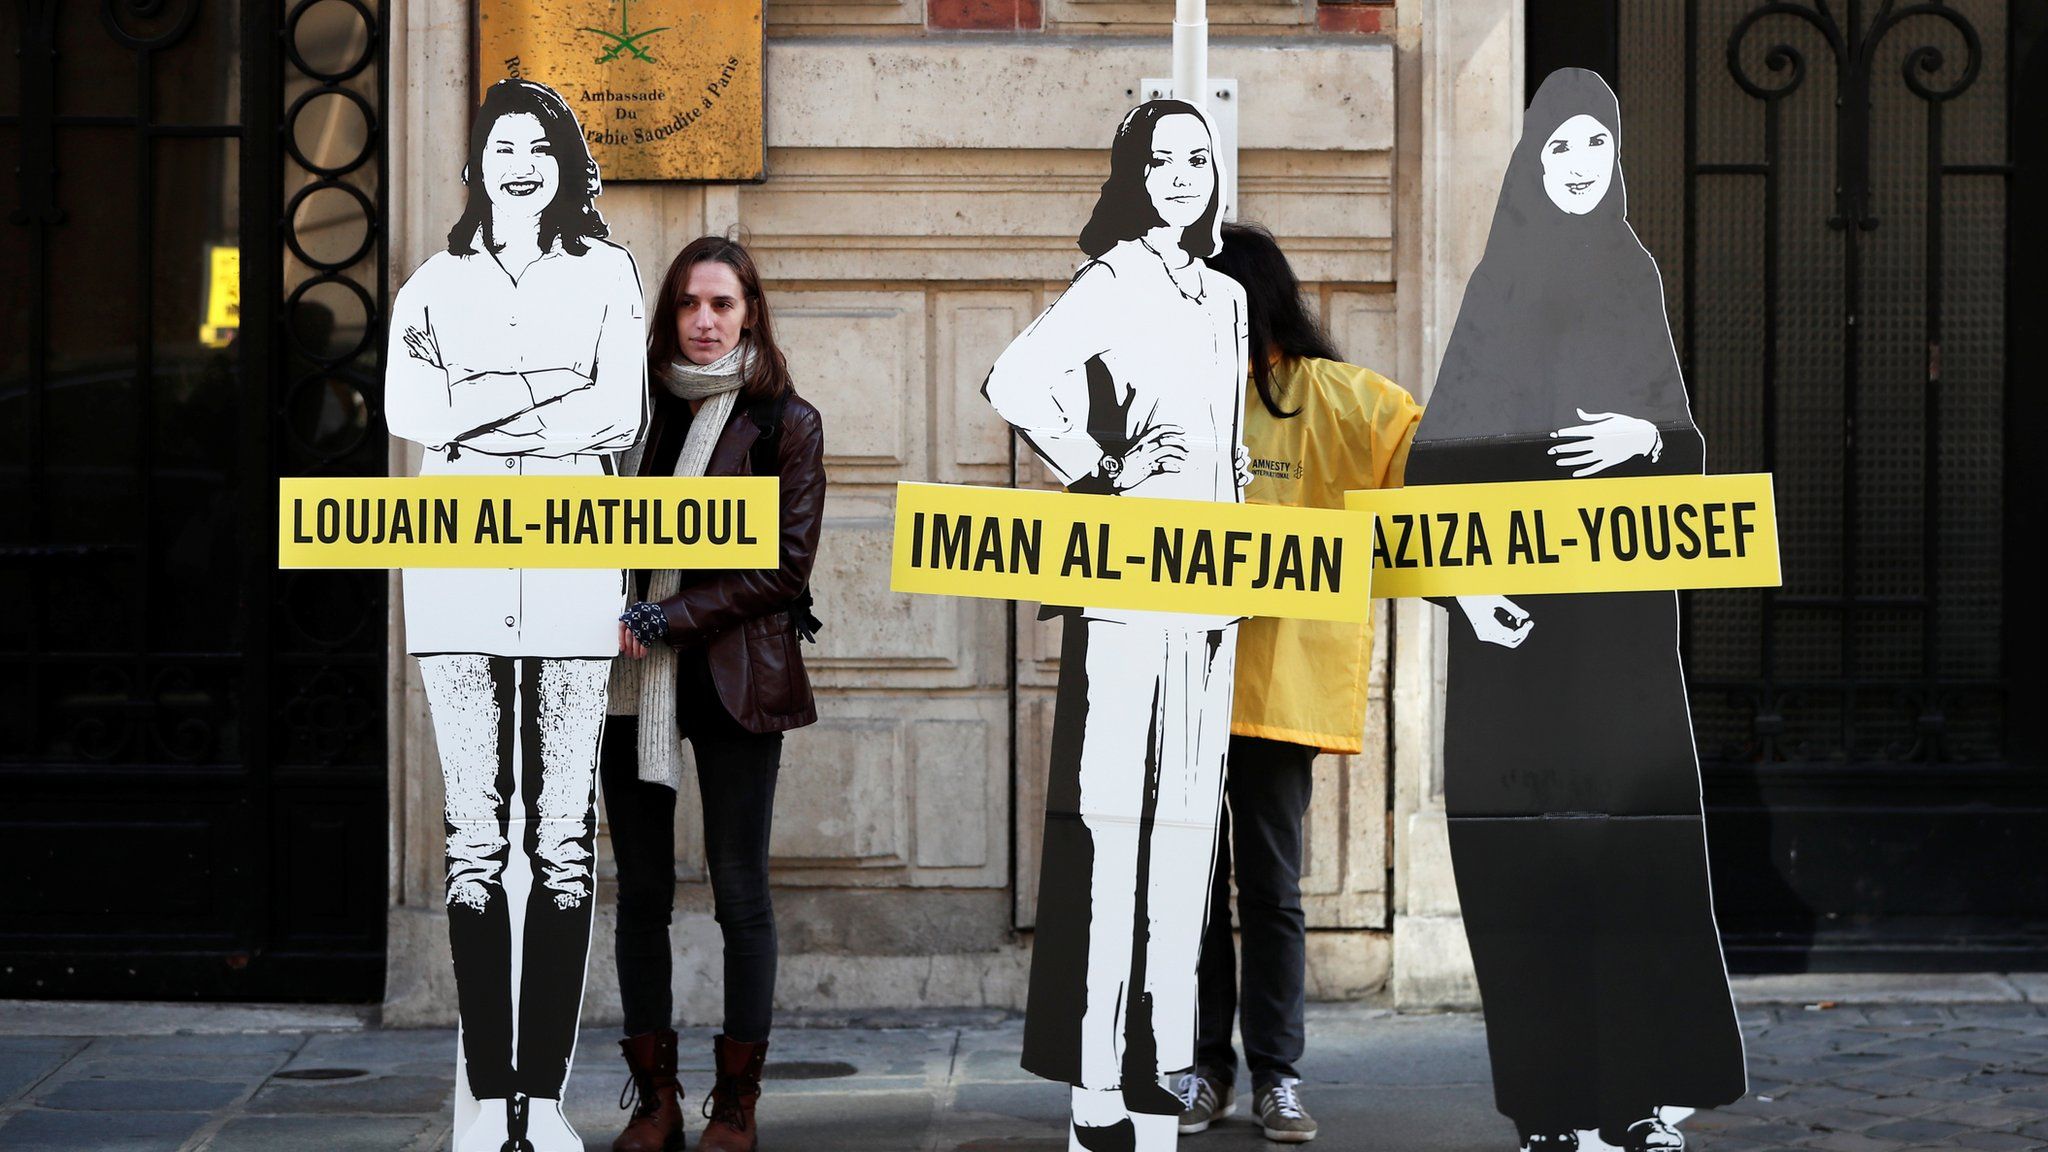 Amnesty International urges Saudi authorities to release activists Loujain al-Hathloul, Eman al-Nafjan and Aziza al-Yousef, outside the Saudi Arabian embassy in Paris, March 8, 2019